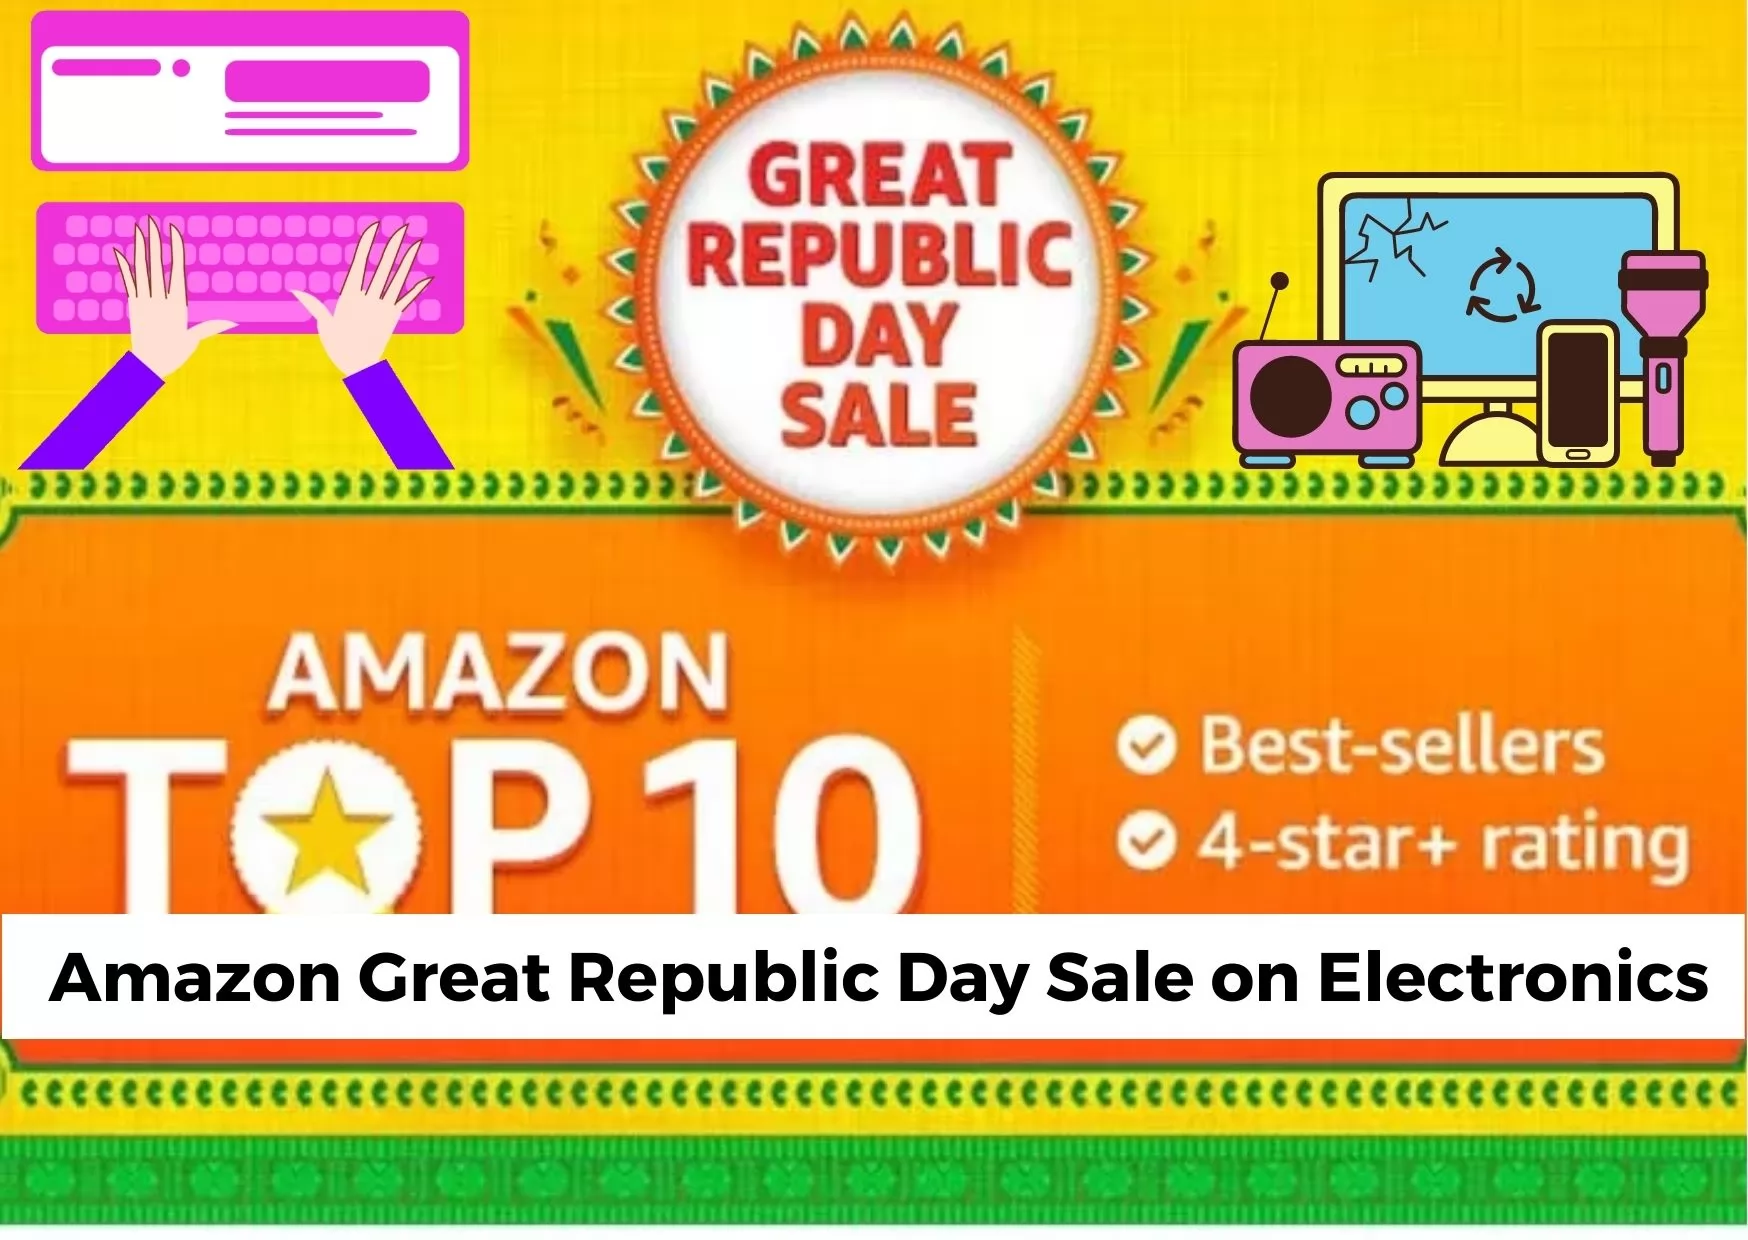 Amazon Great Republic Day Sale on Electronics